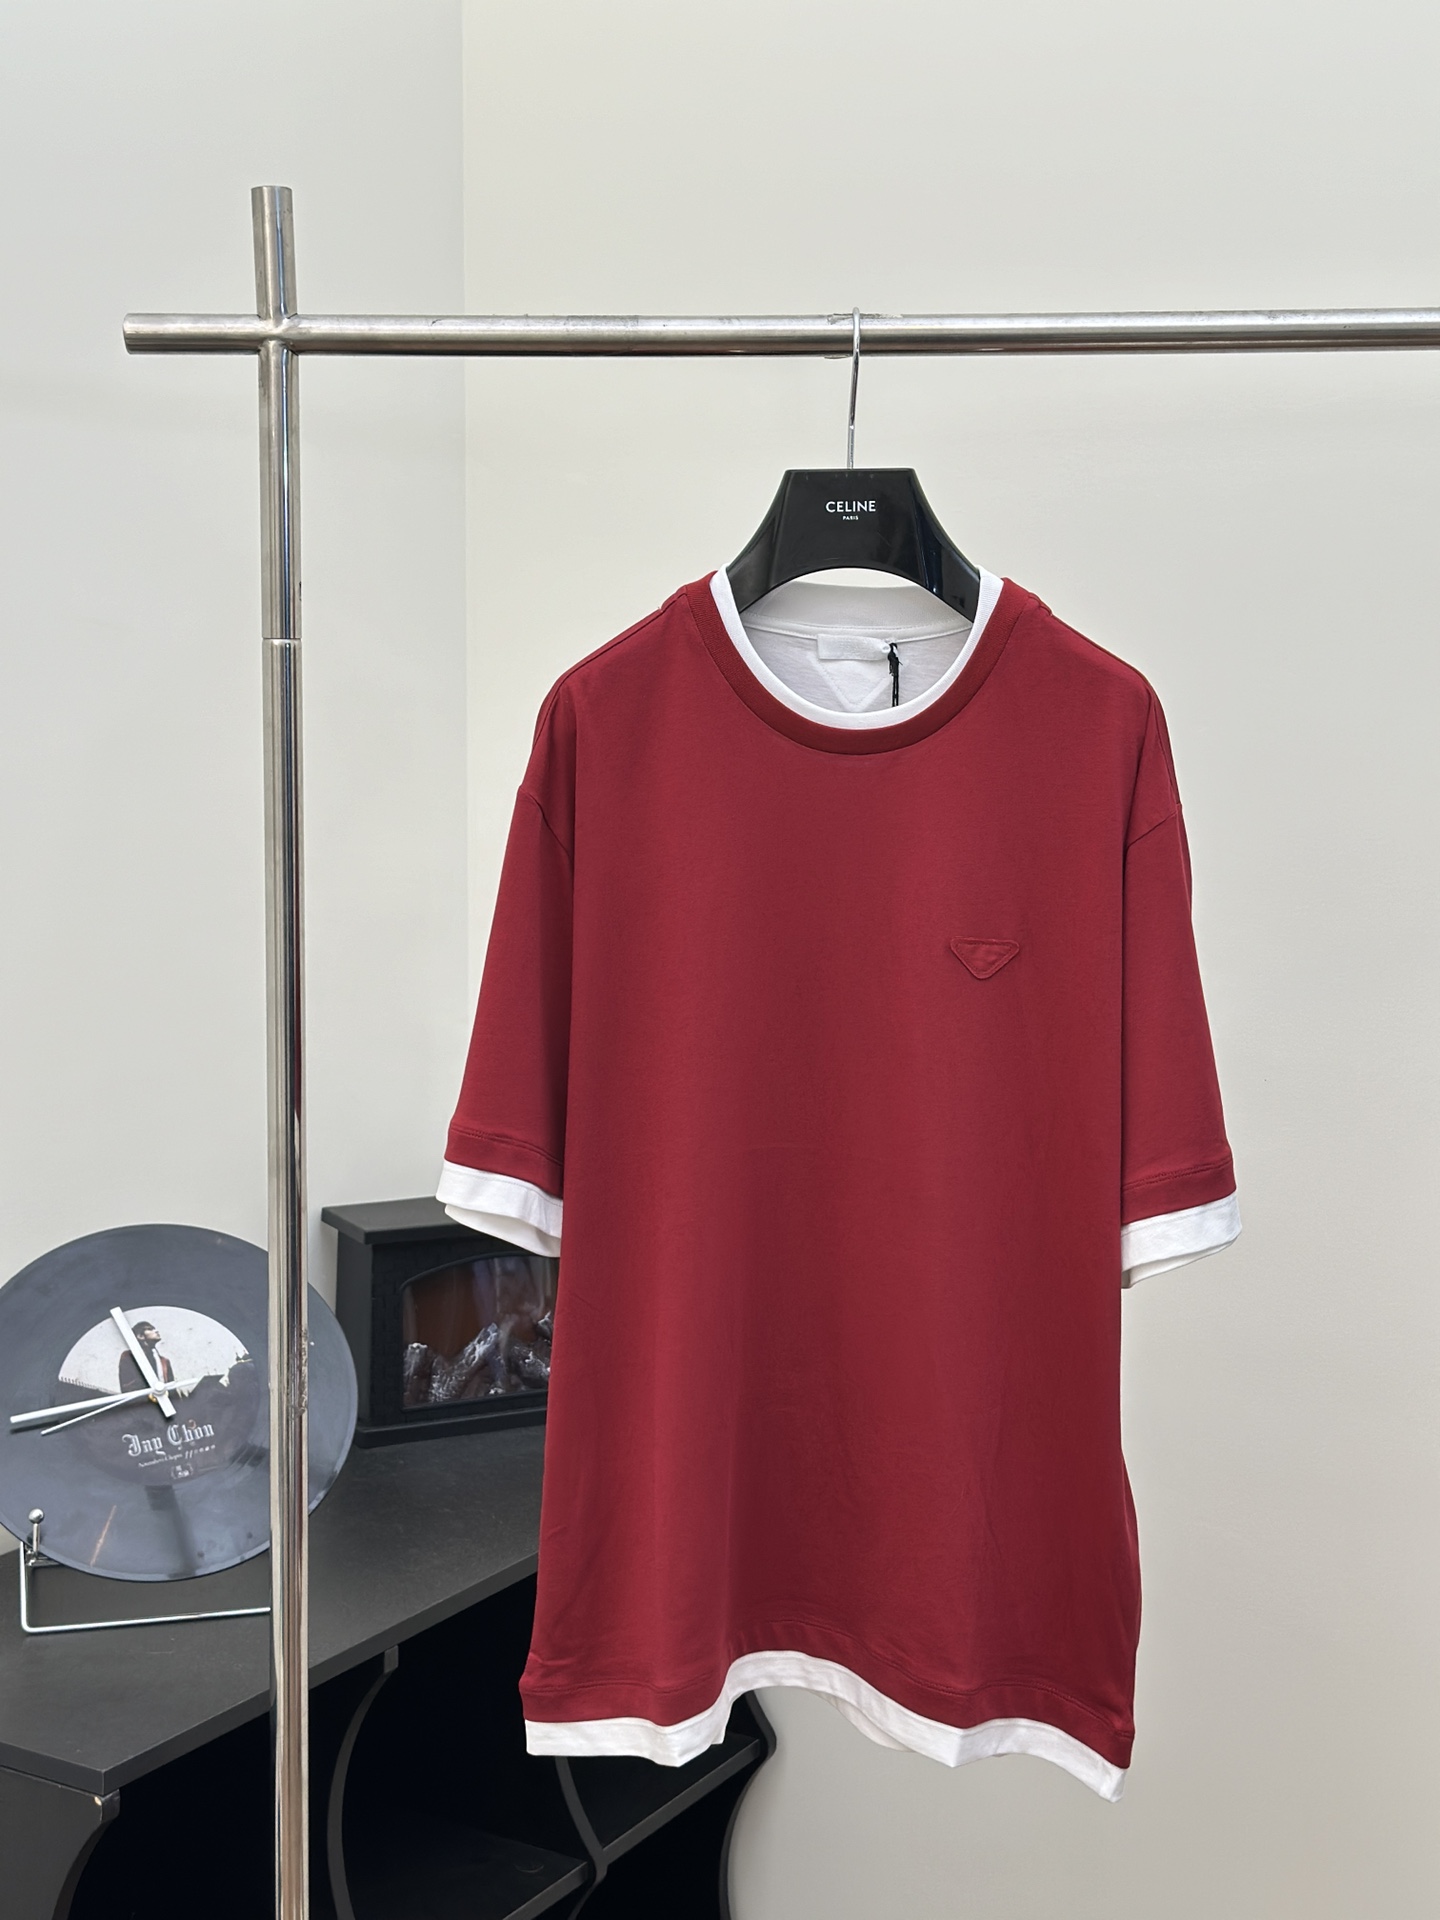 Prada Clothing T-Shirt Splicing Cotton Knitting Short Sleeve